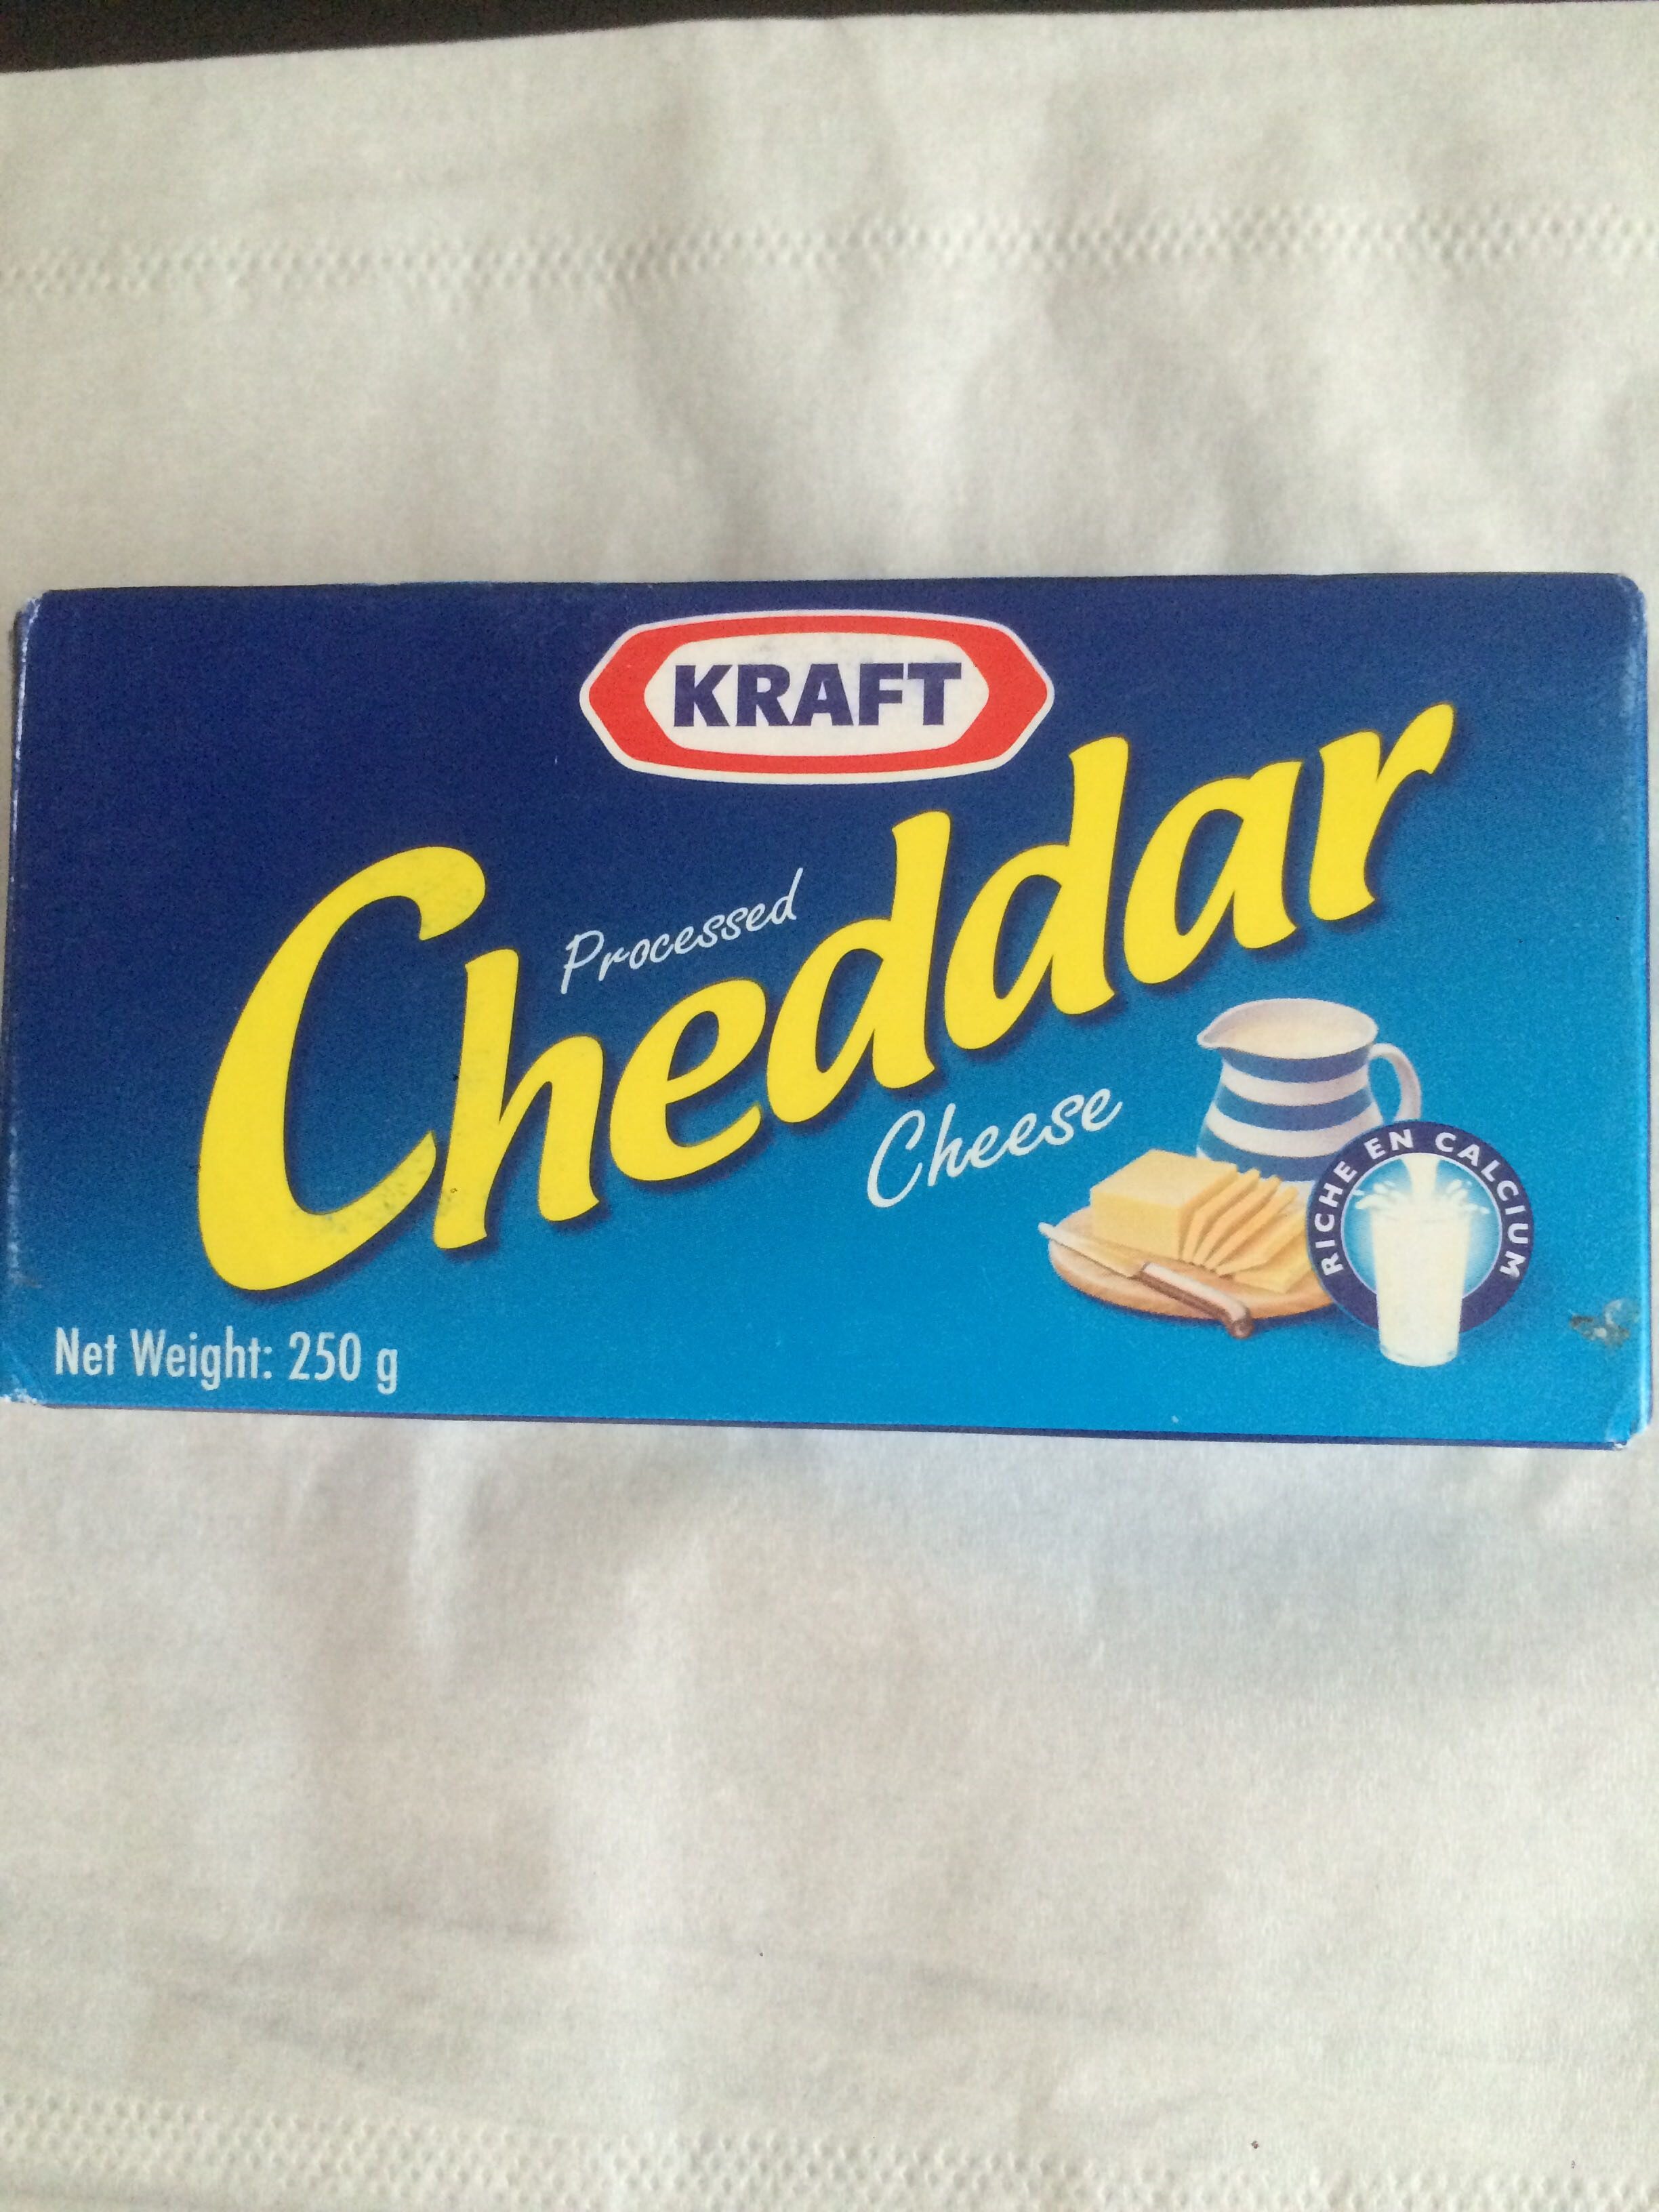 Cheddar - Product - en